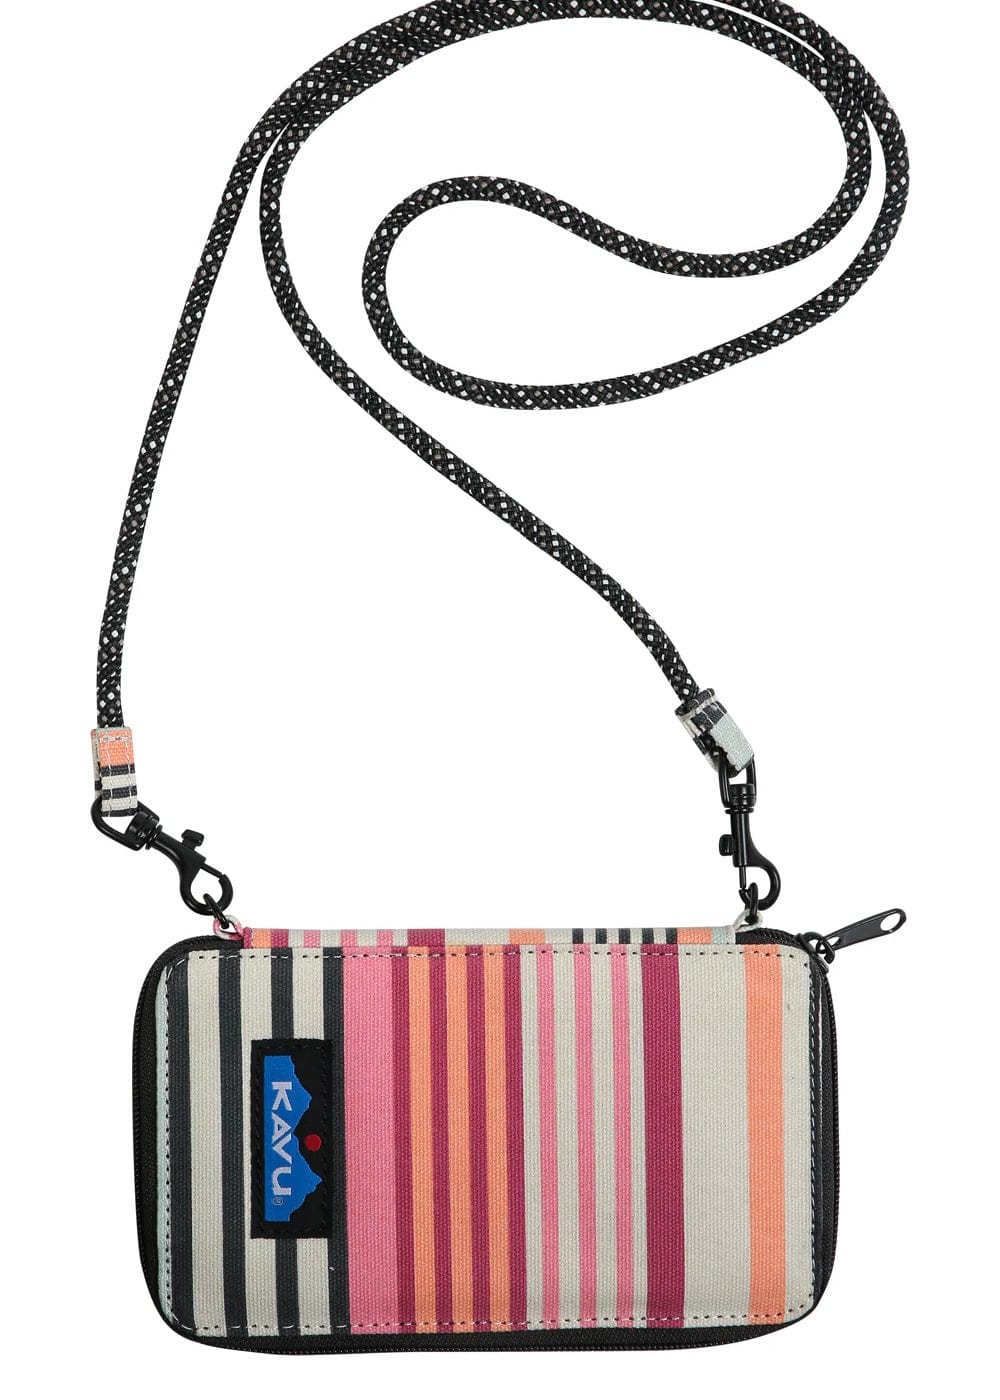 GO TIME! Phone Wallet | KAVU Kavu Handbags, Wallets & Cases Midsummer Stripe